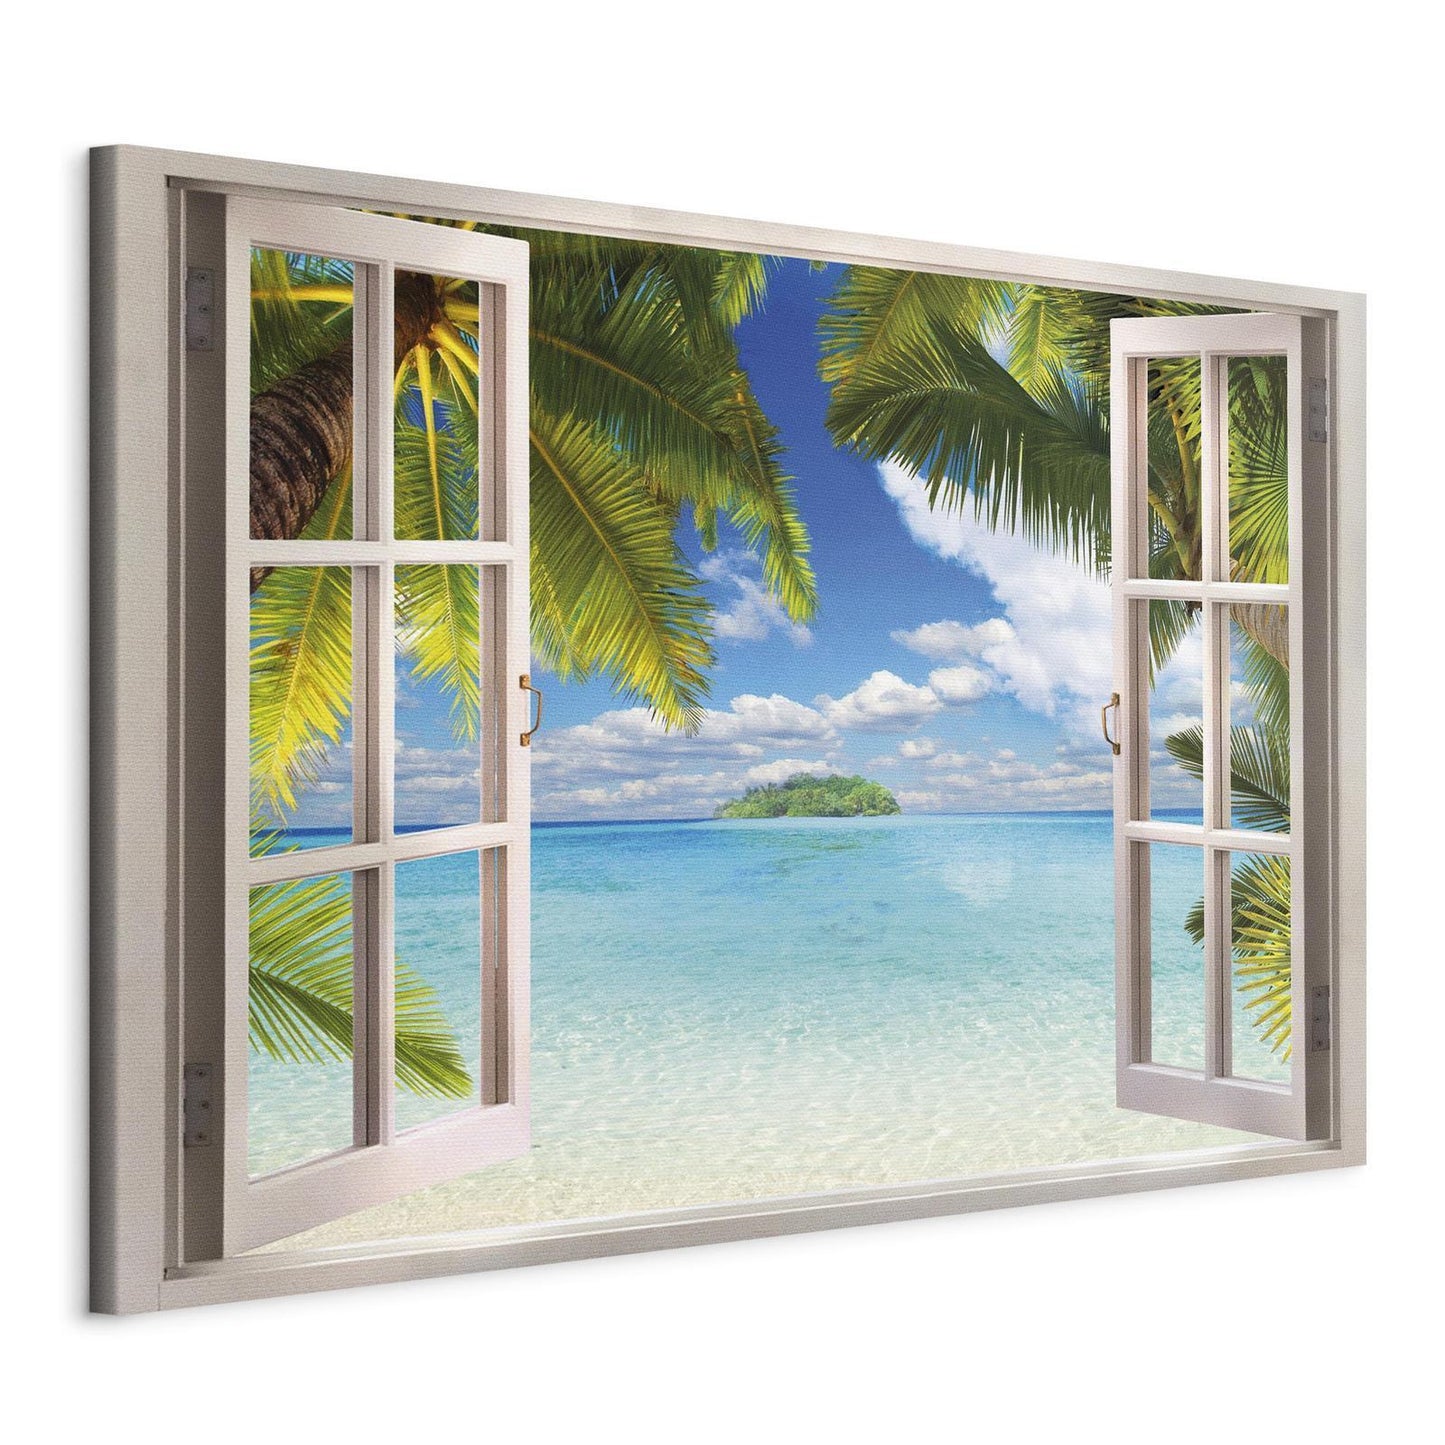 Painting - Window: Sea View